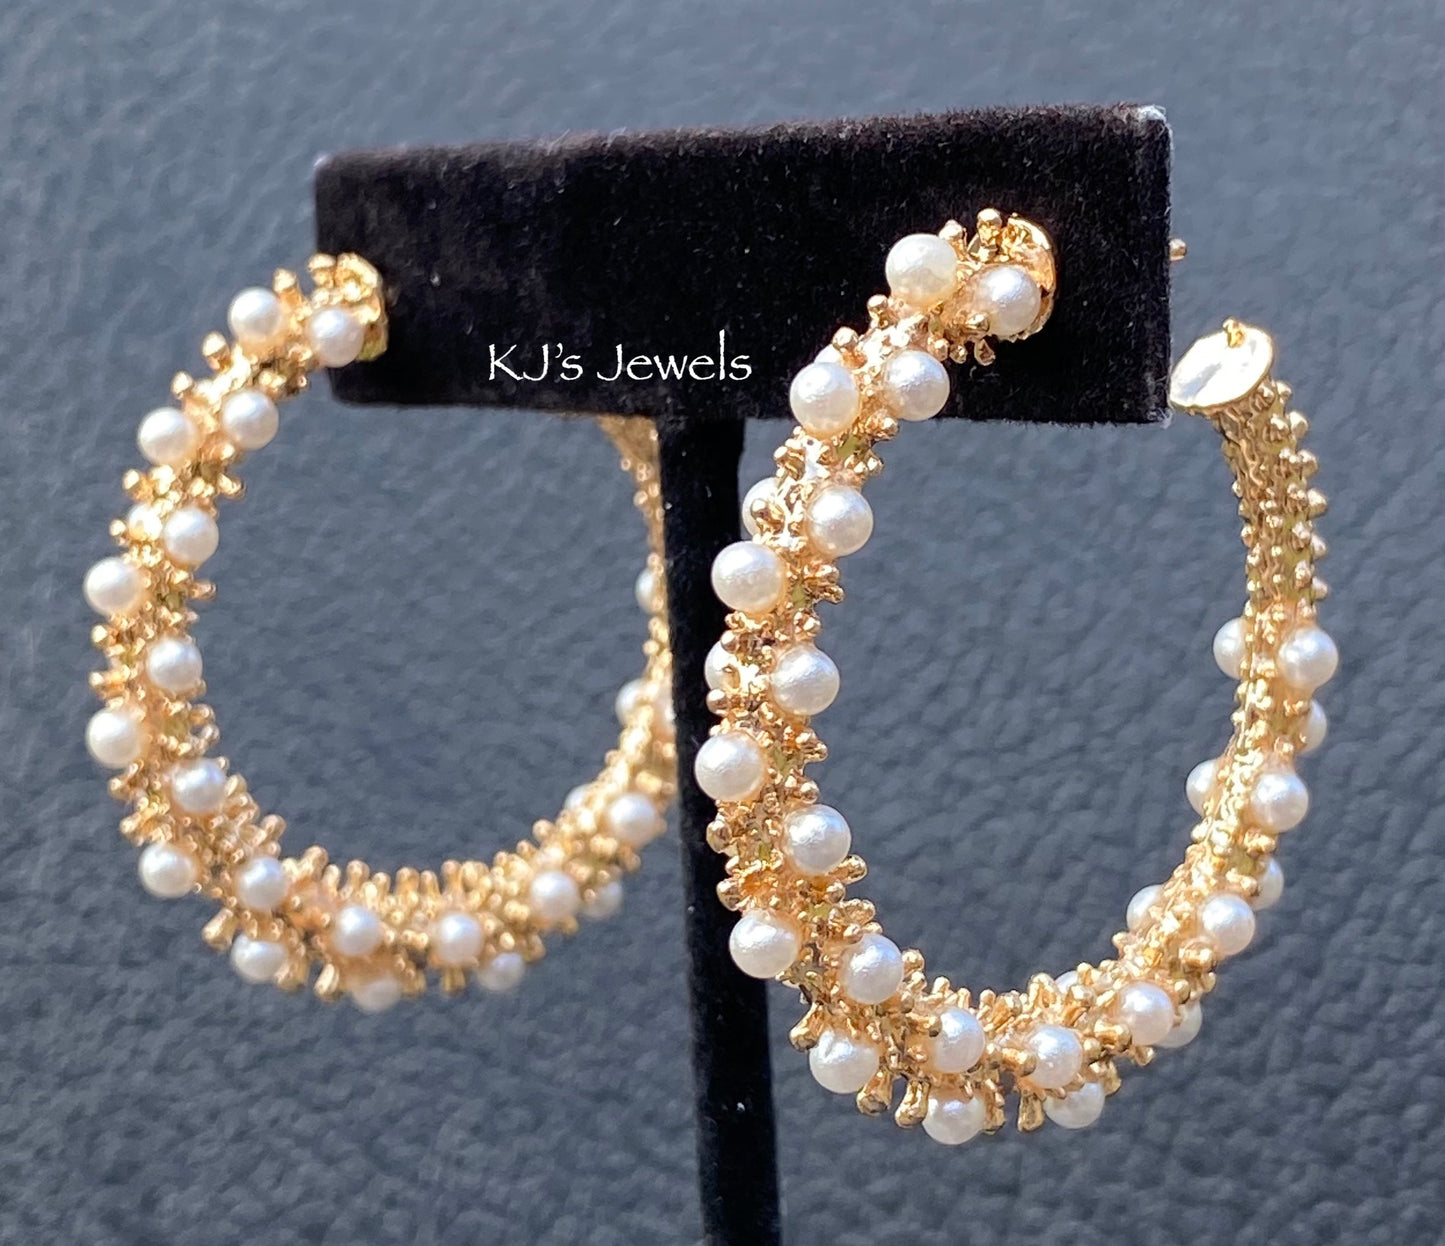 1.5 inch gold and pearl hoop earrings, pierced